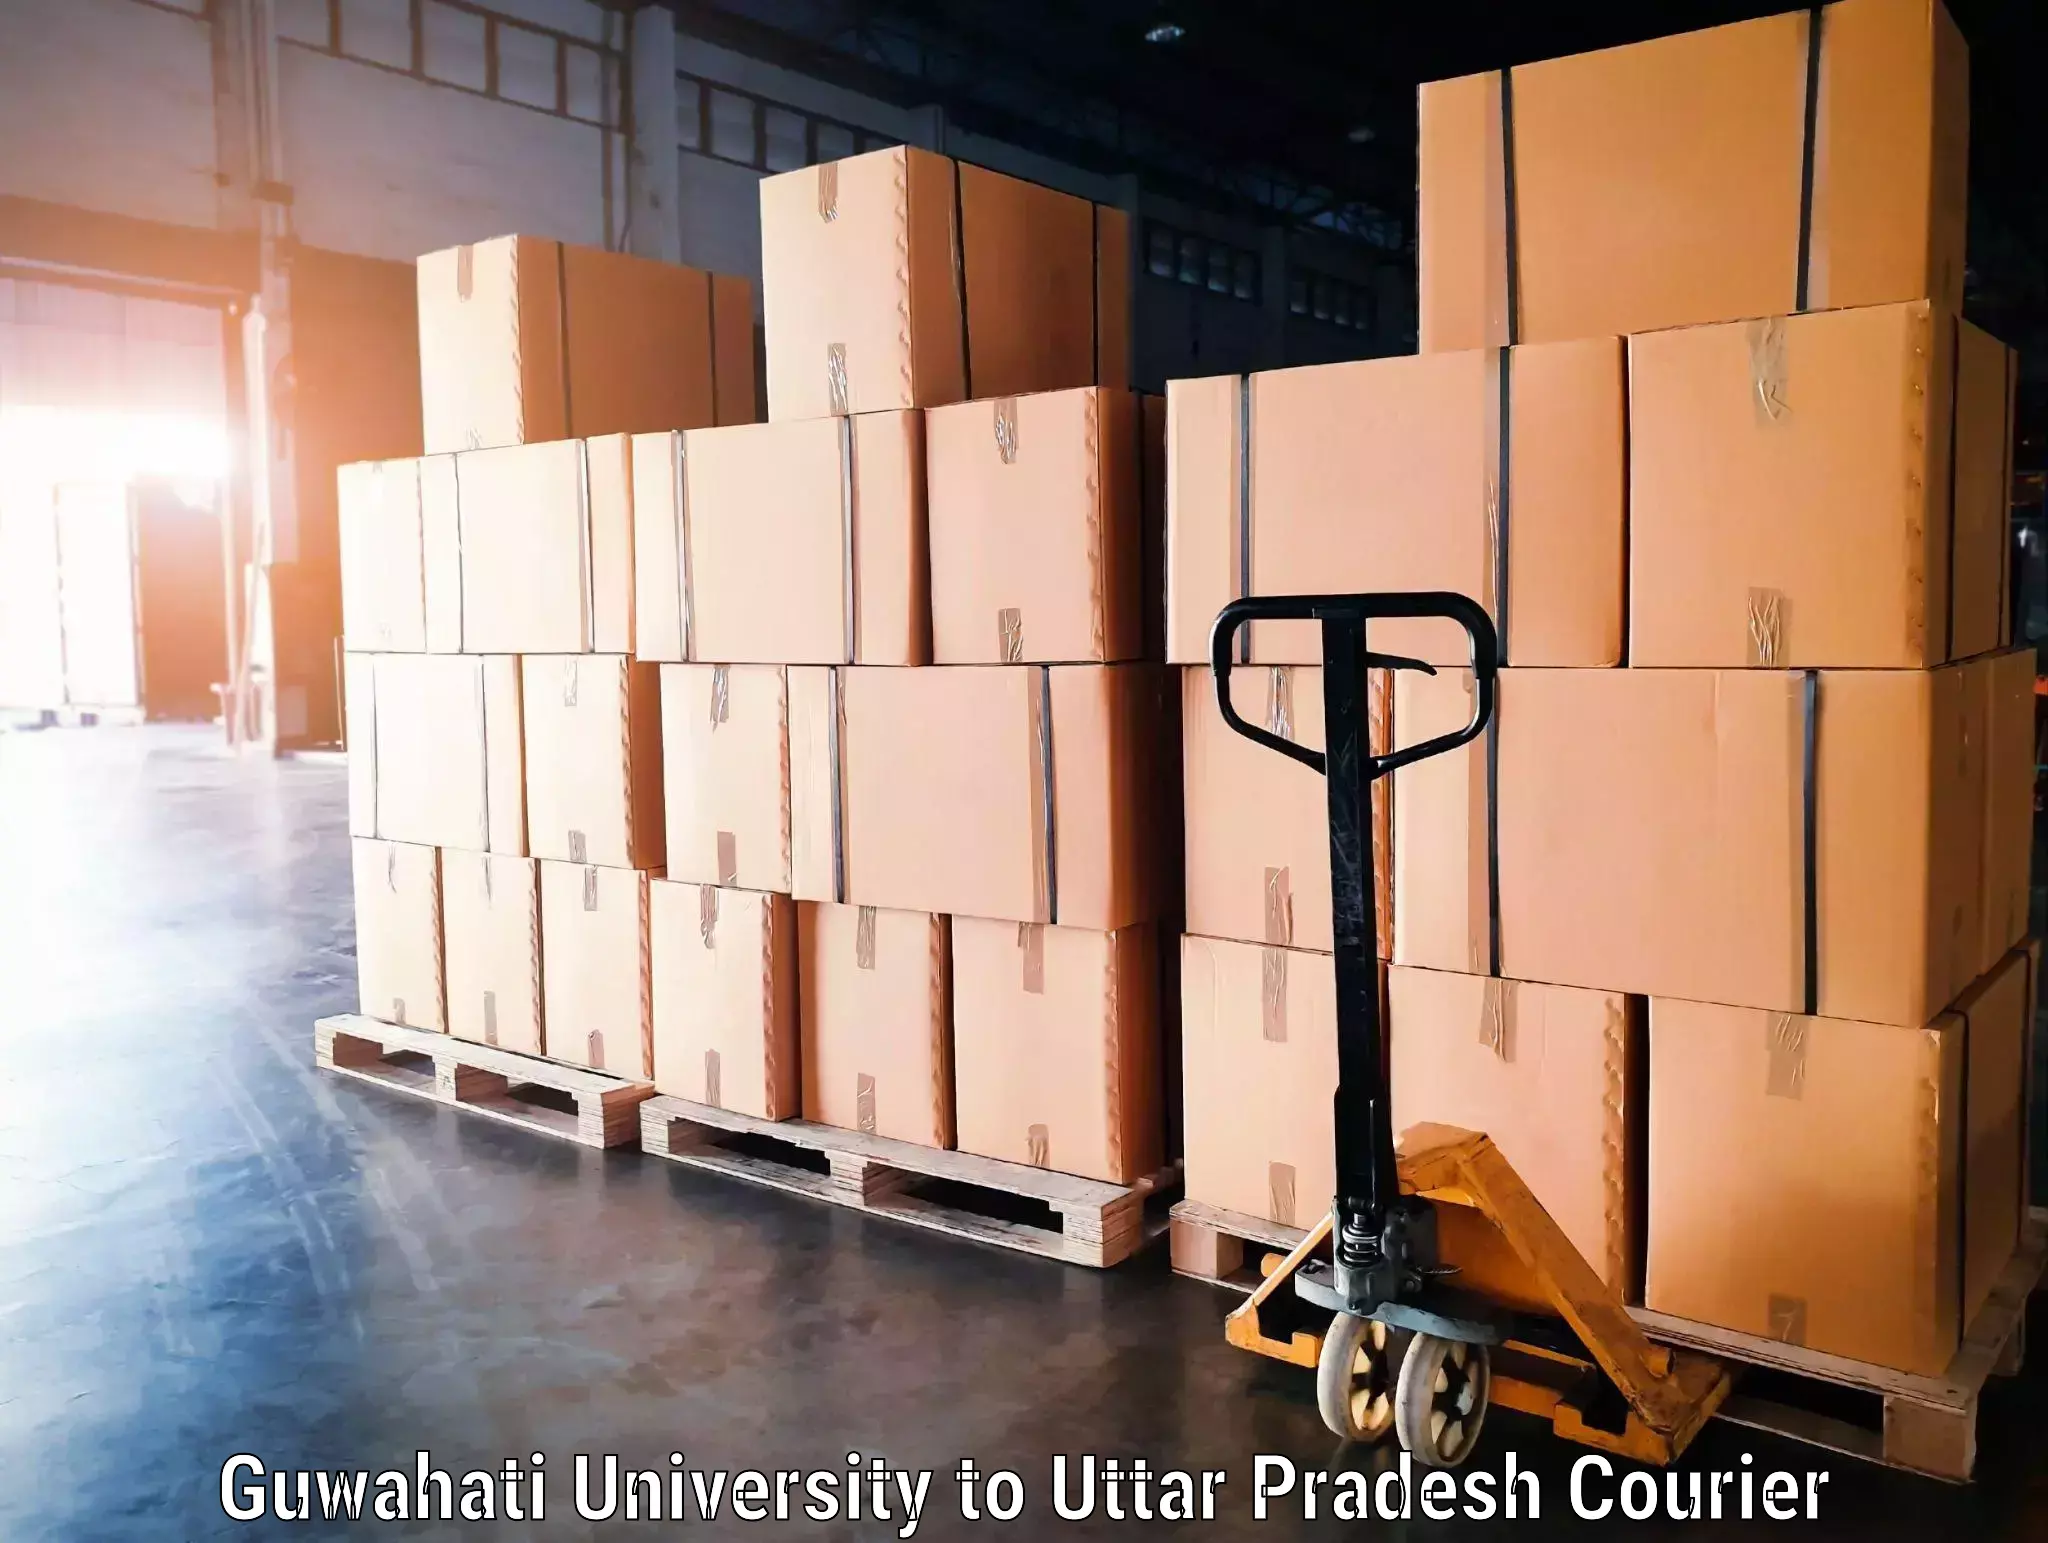 Baggage relocation service Guwahati University to Hapur